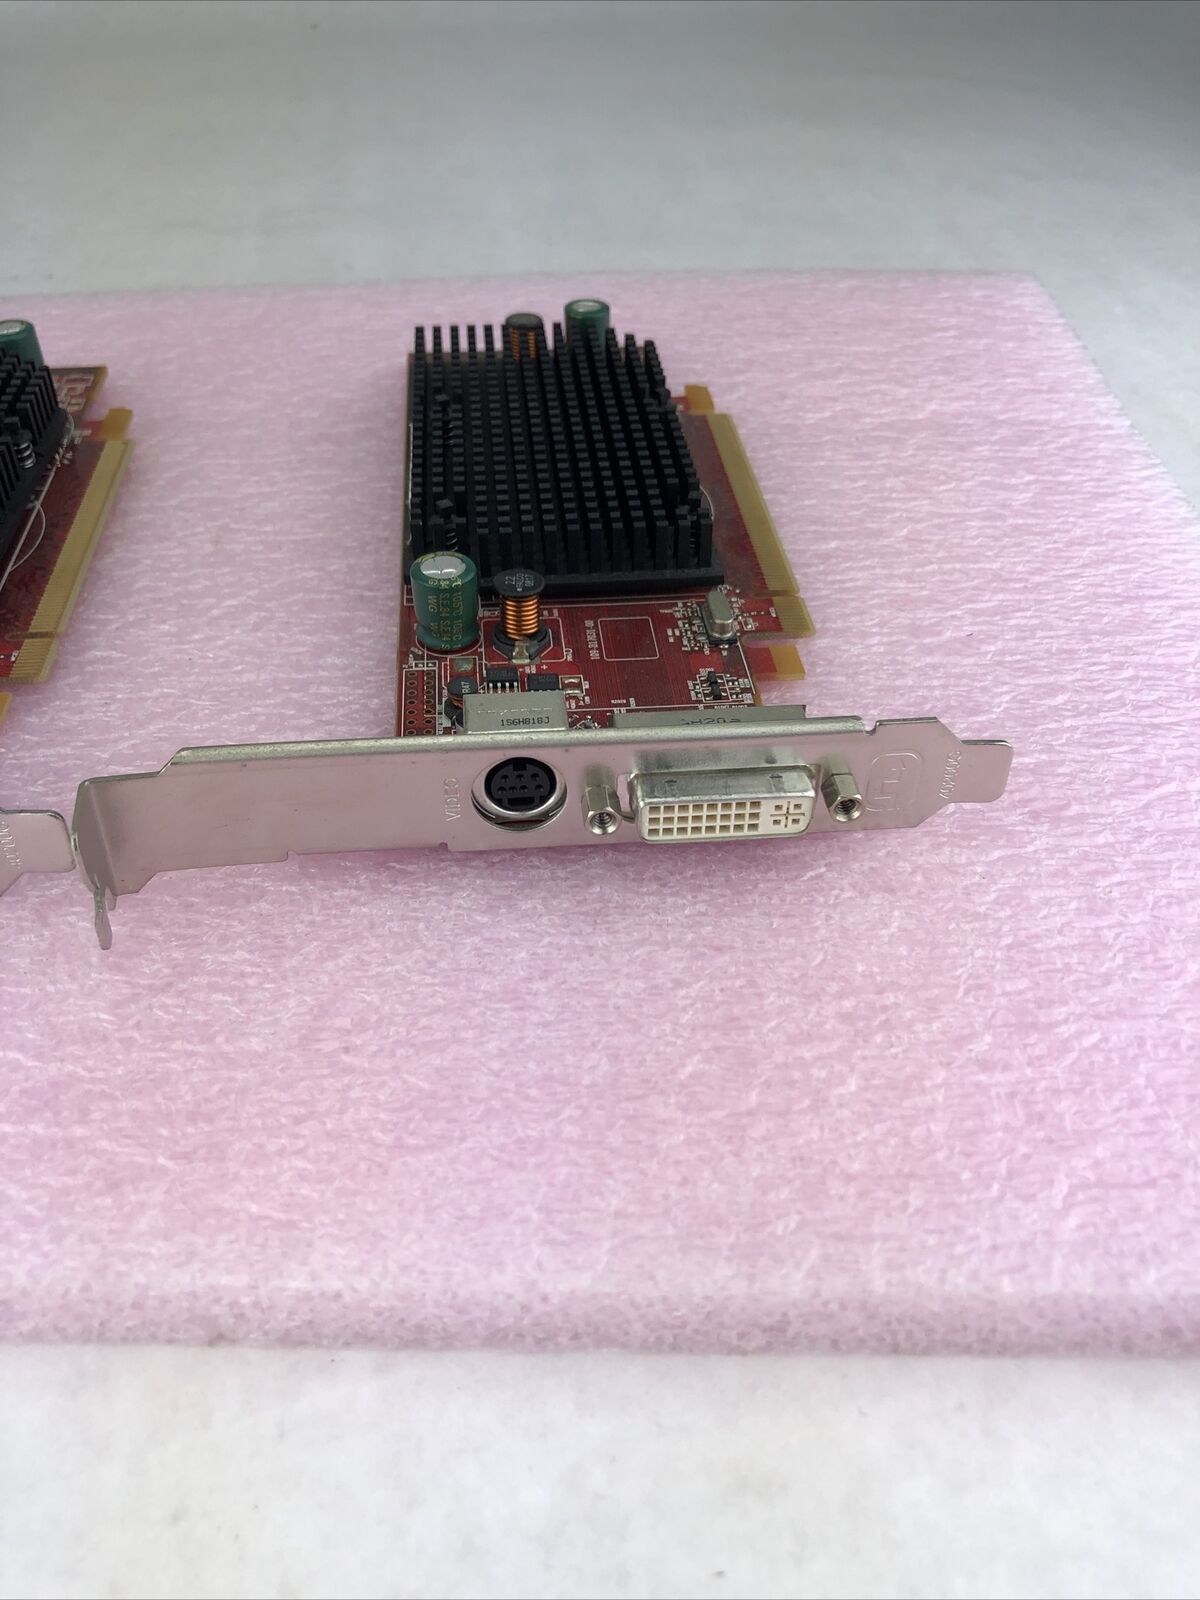 Lot of 2 AMD Radeon ATI-102-B170 HD 2400 Full Profile GPU DVI Port Video Card